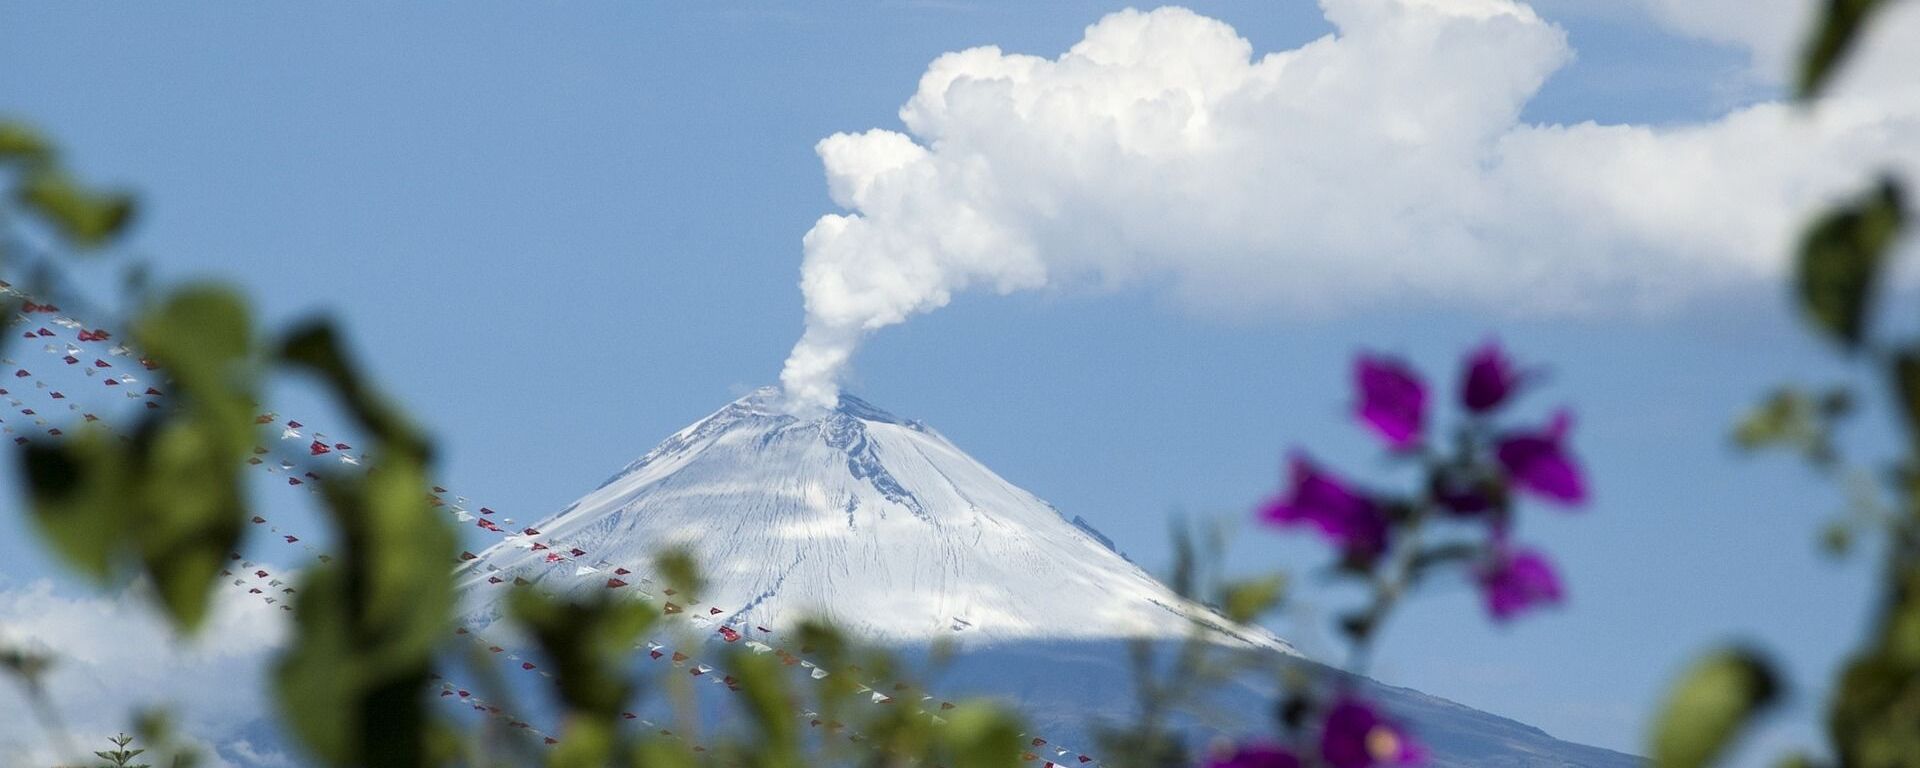 El volcán Popocatépetl, foto de archivo - Sputnik Mundo, 1920, 23.07.2020